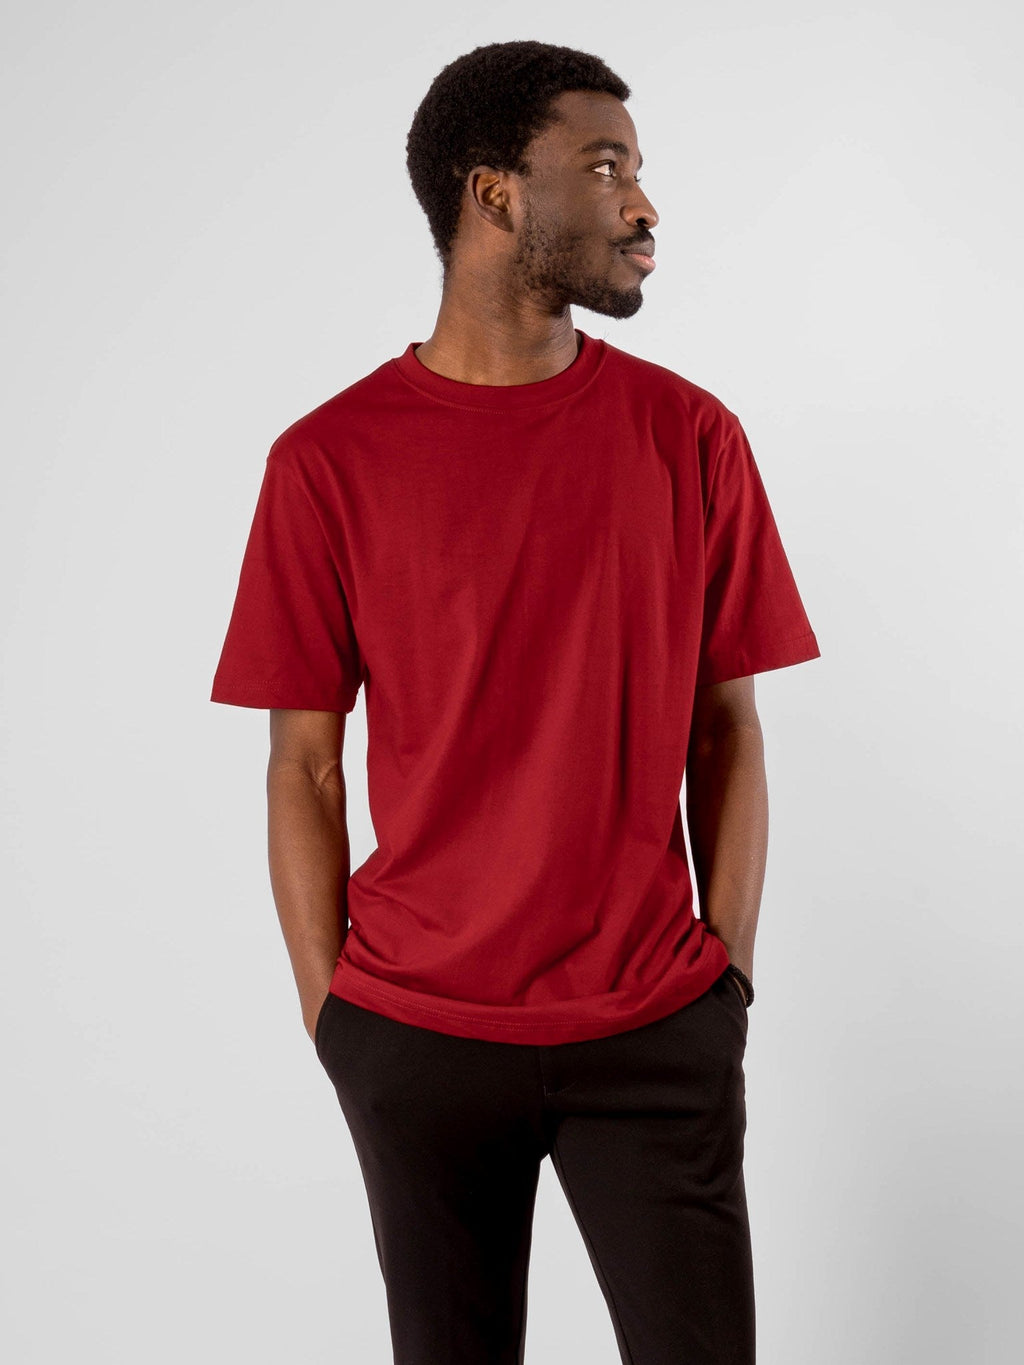 Camiseta de gran tamaño - Rojo